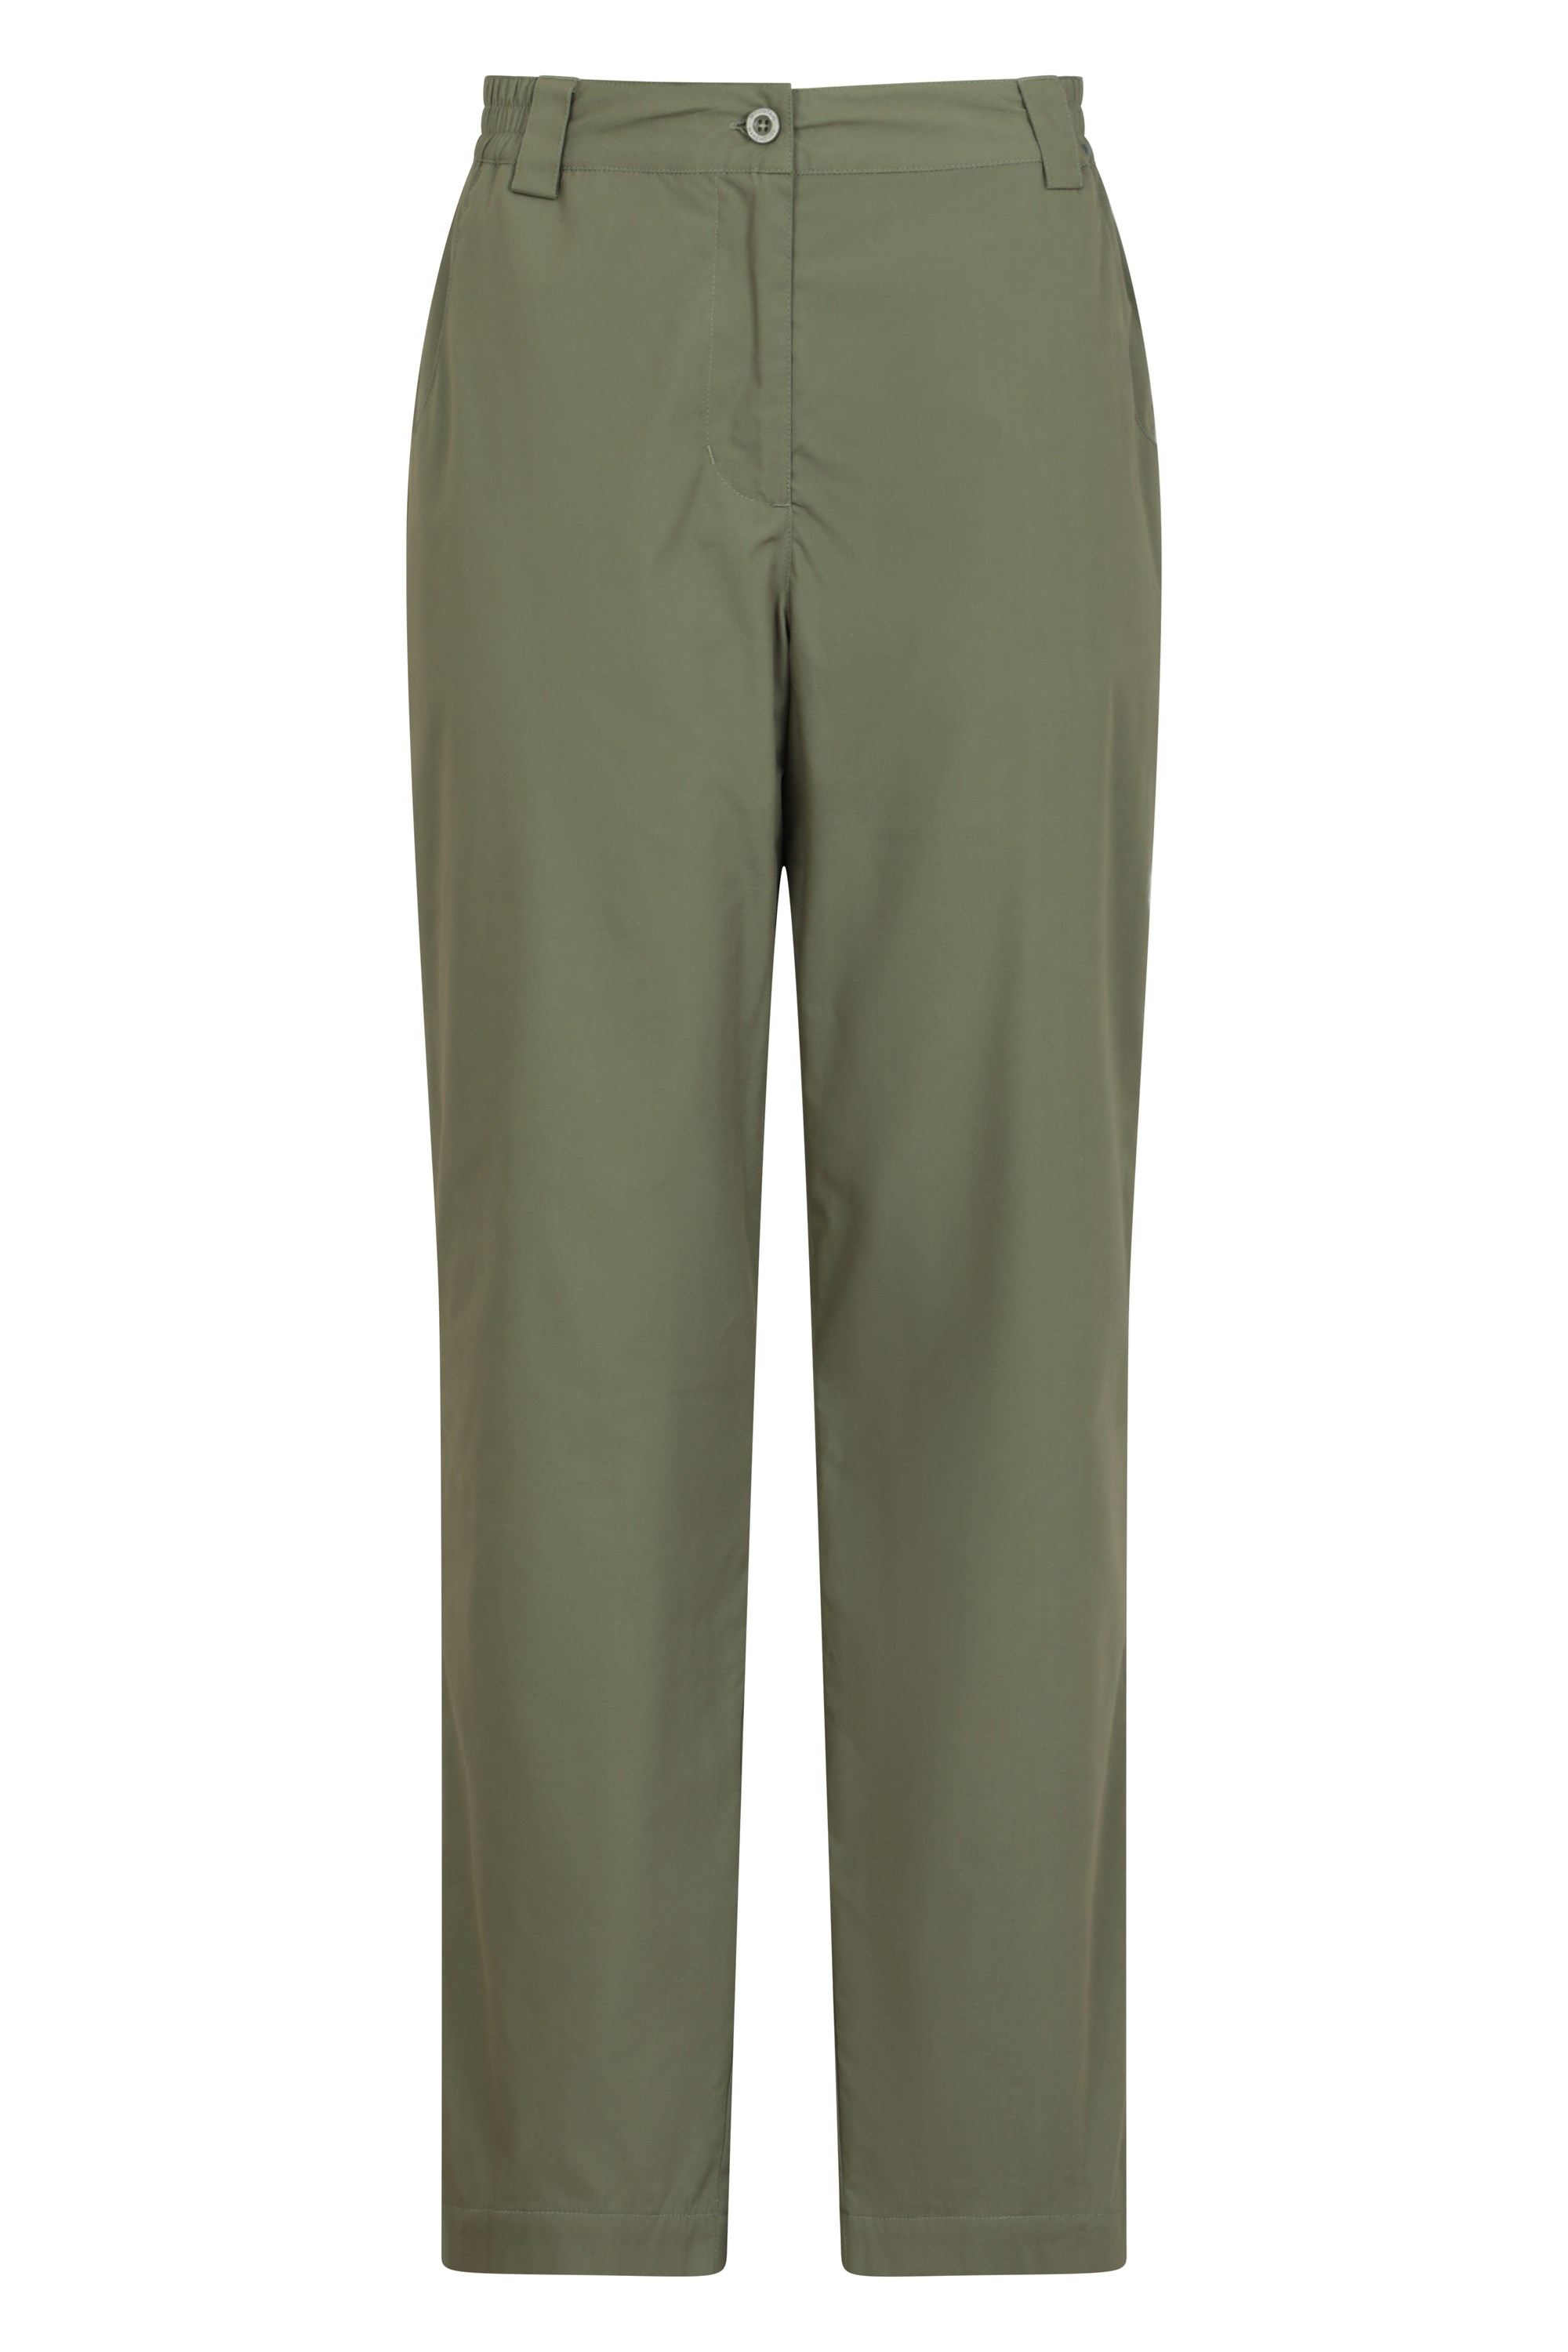 Super Soft Jogger - Trek Green, Women's Trousers & Yoga Pants